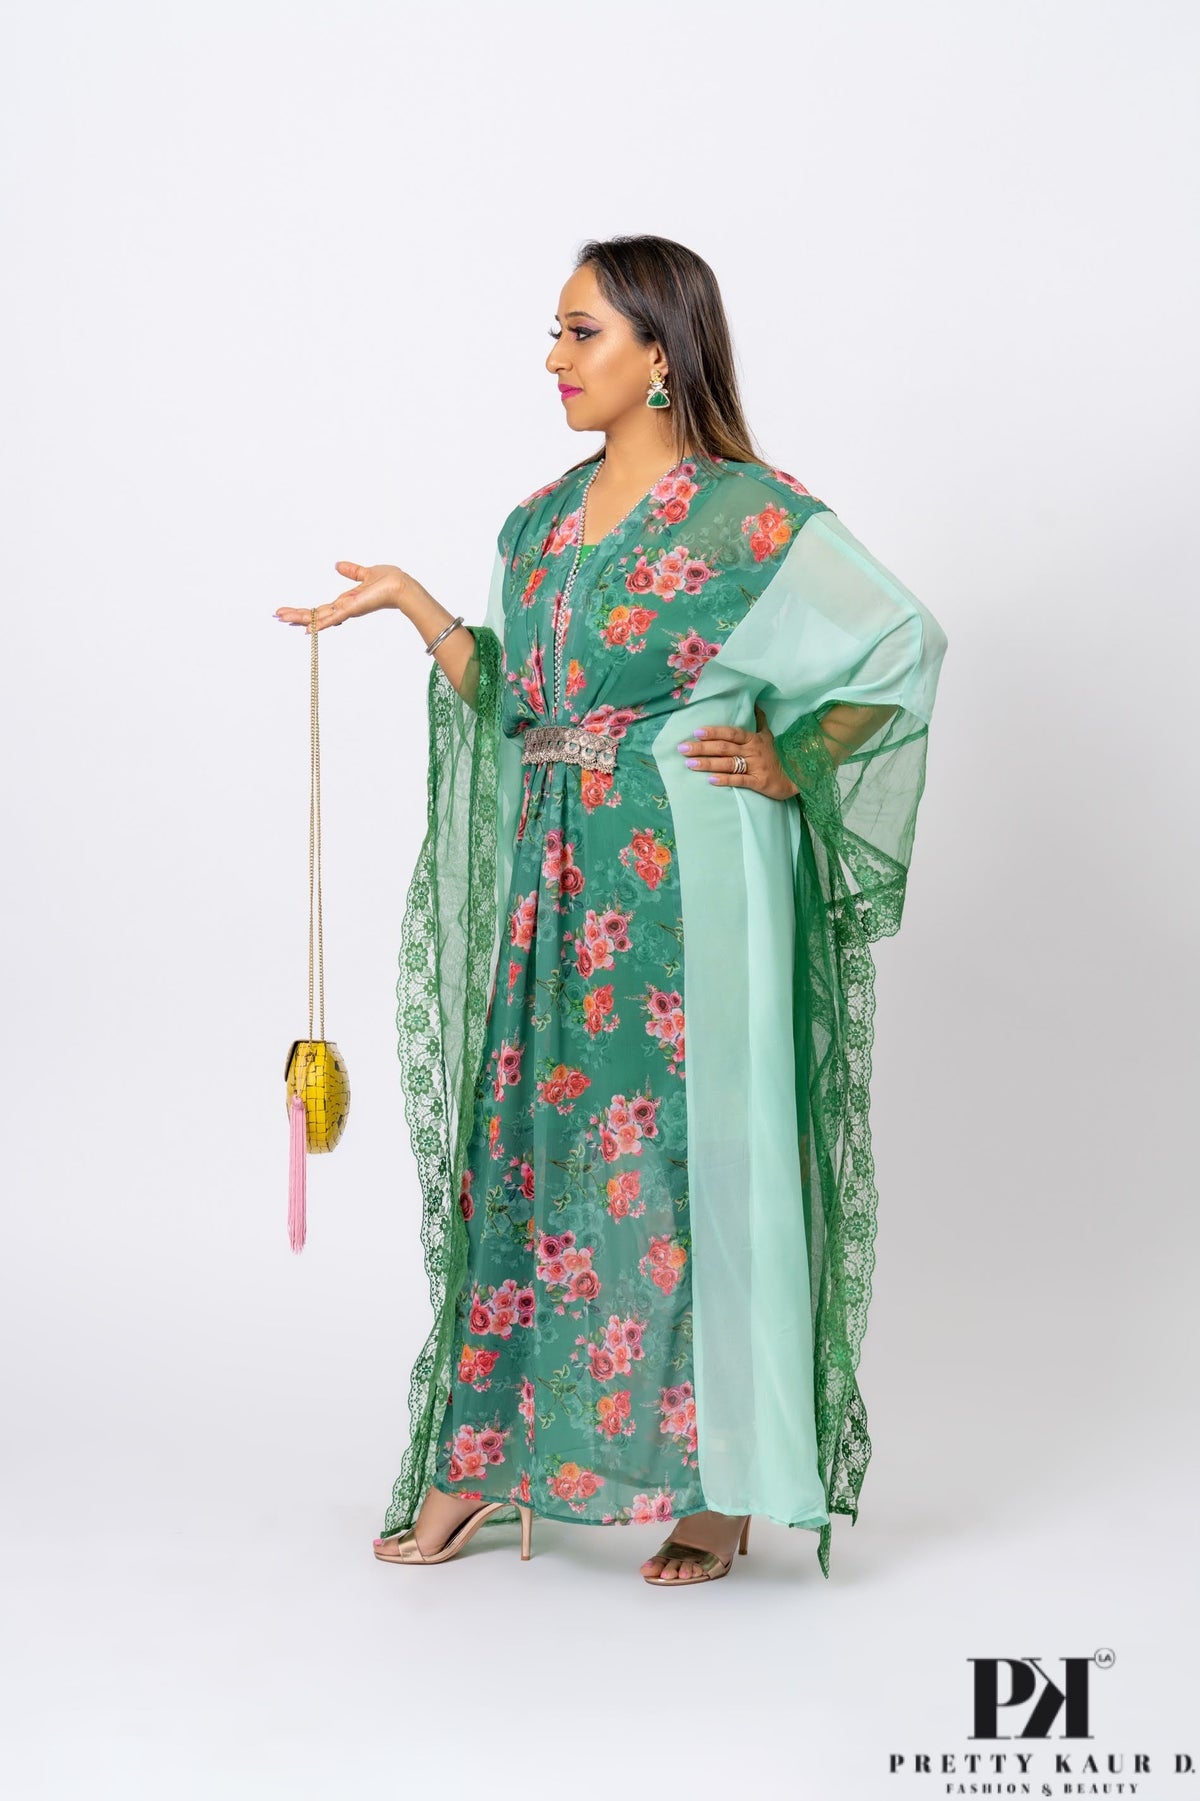 Pretty-Kaur-fashion-beauty-Green-Floral-Print-Kaftan-2